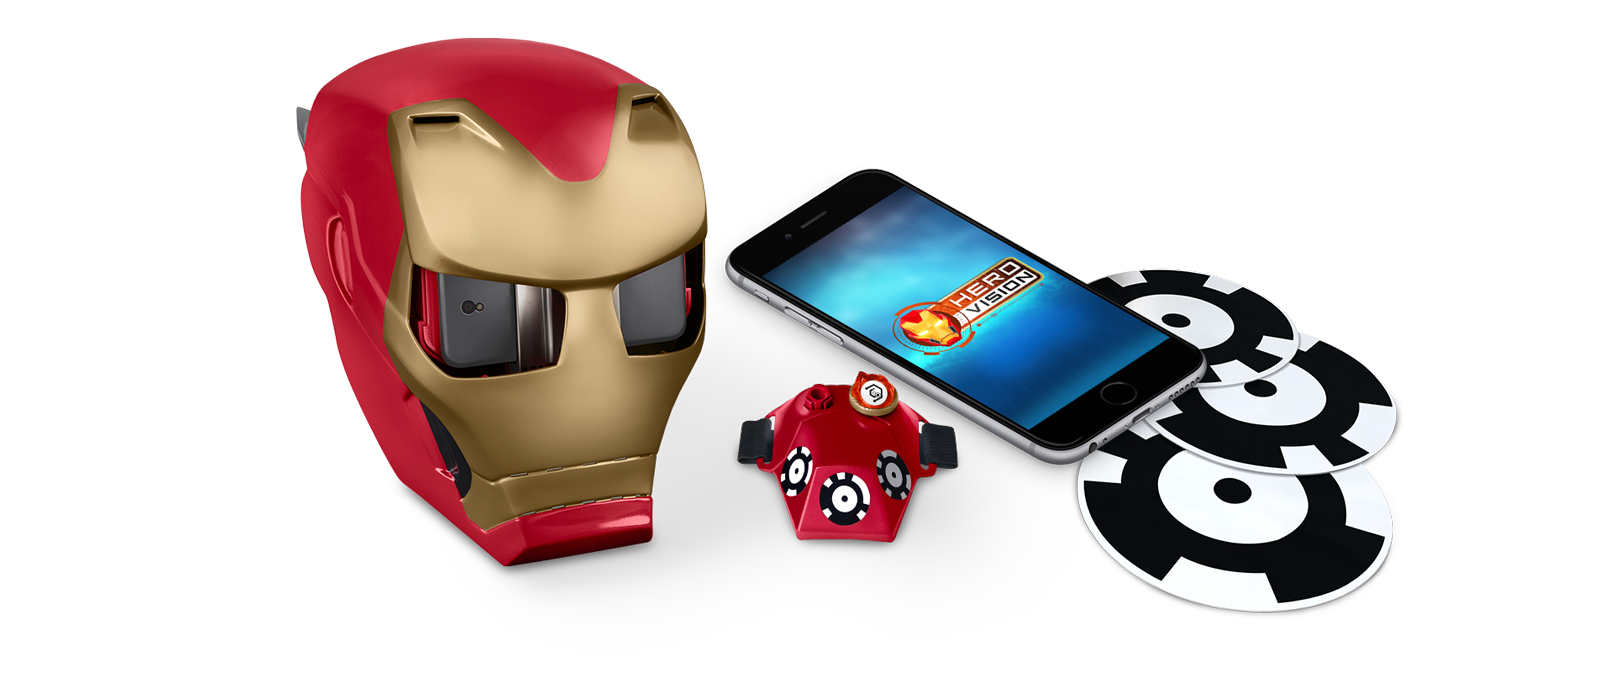 Hero Vision Iron Man (Realidad aumentada)